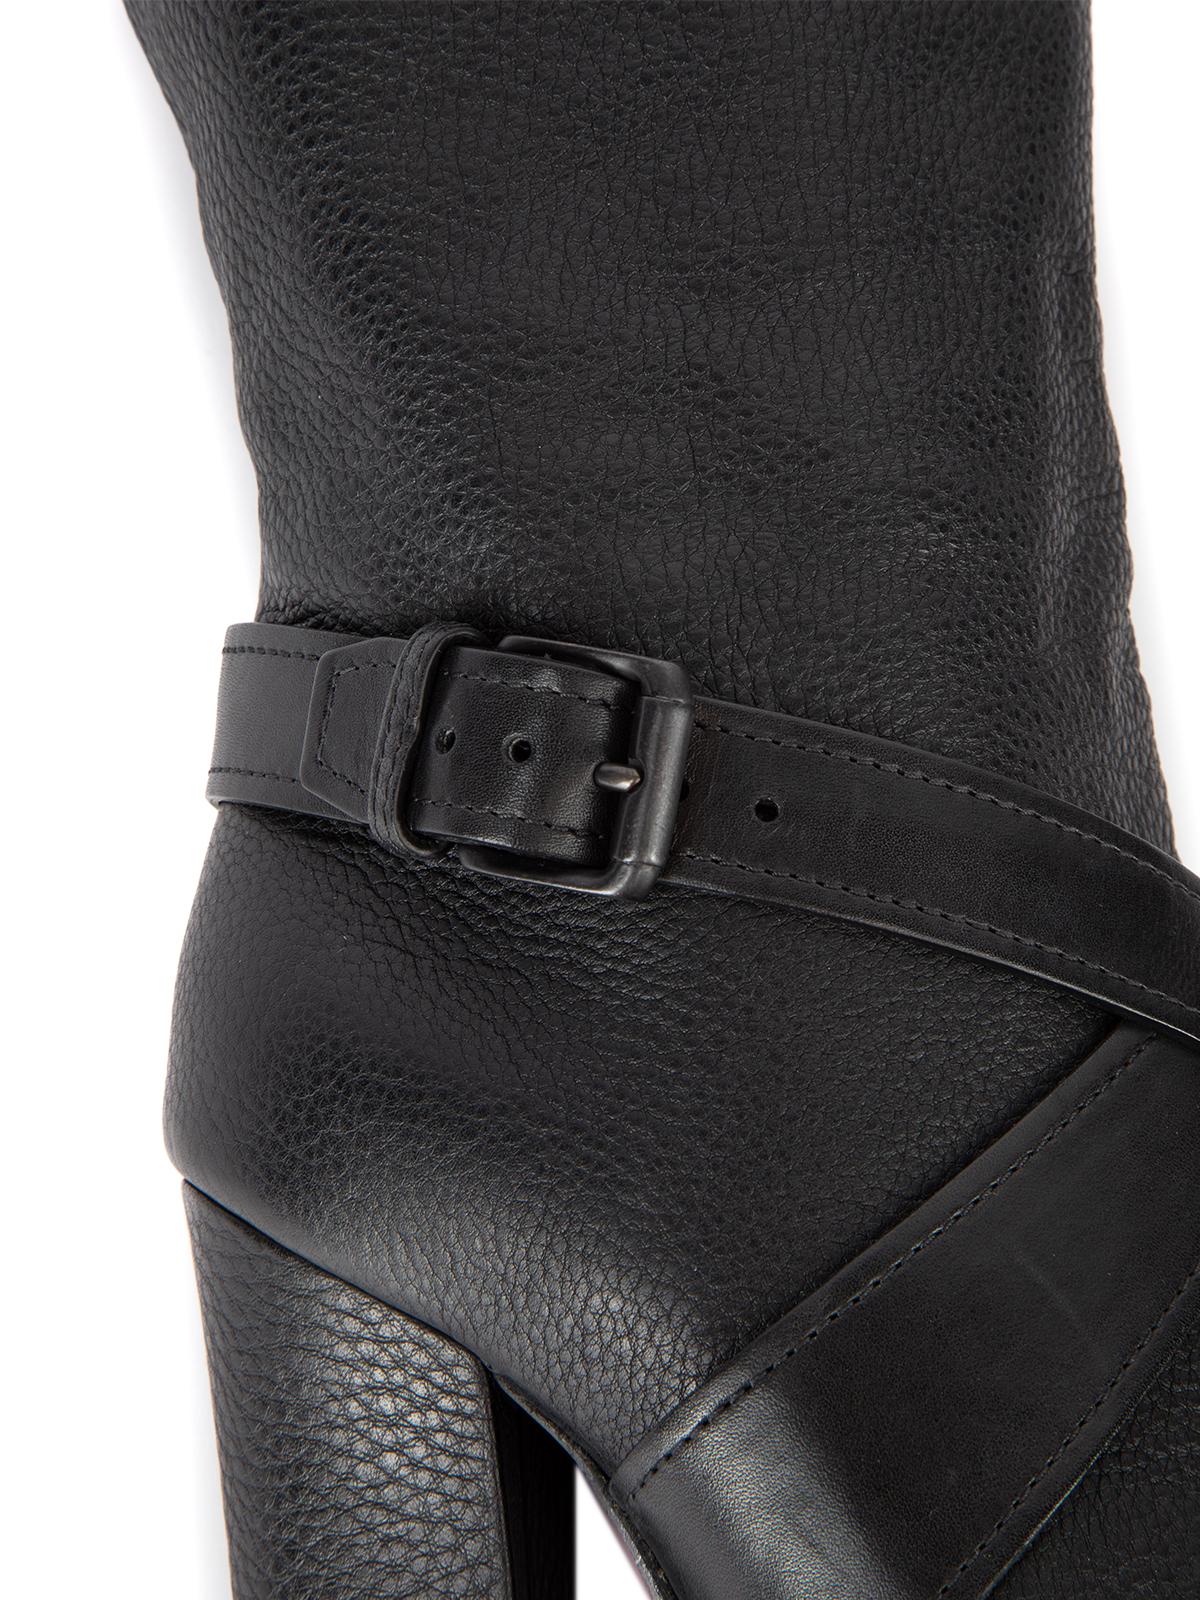 Pre-Loved Bottega Veneta Women's Knee High Boots with Buckle Detail For Sale 3